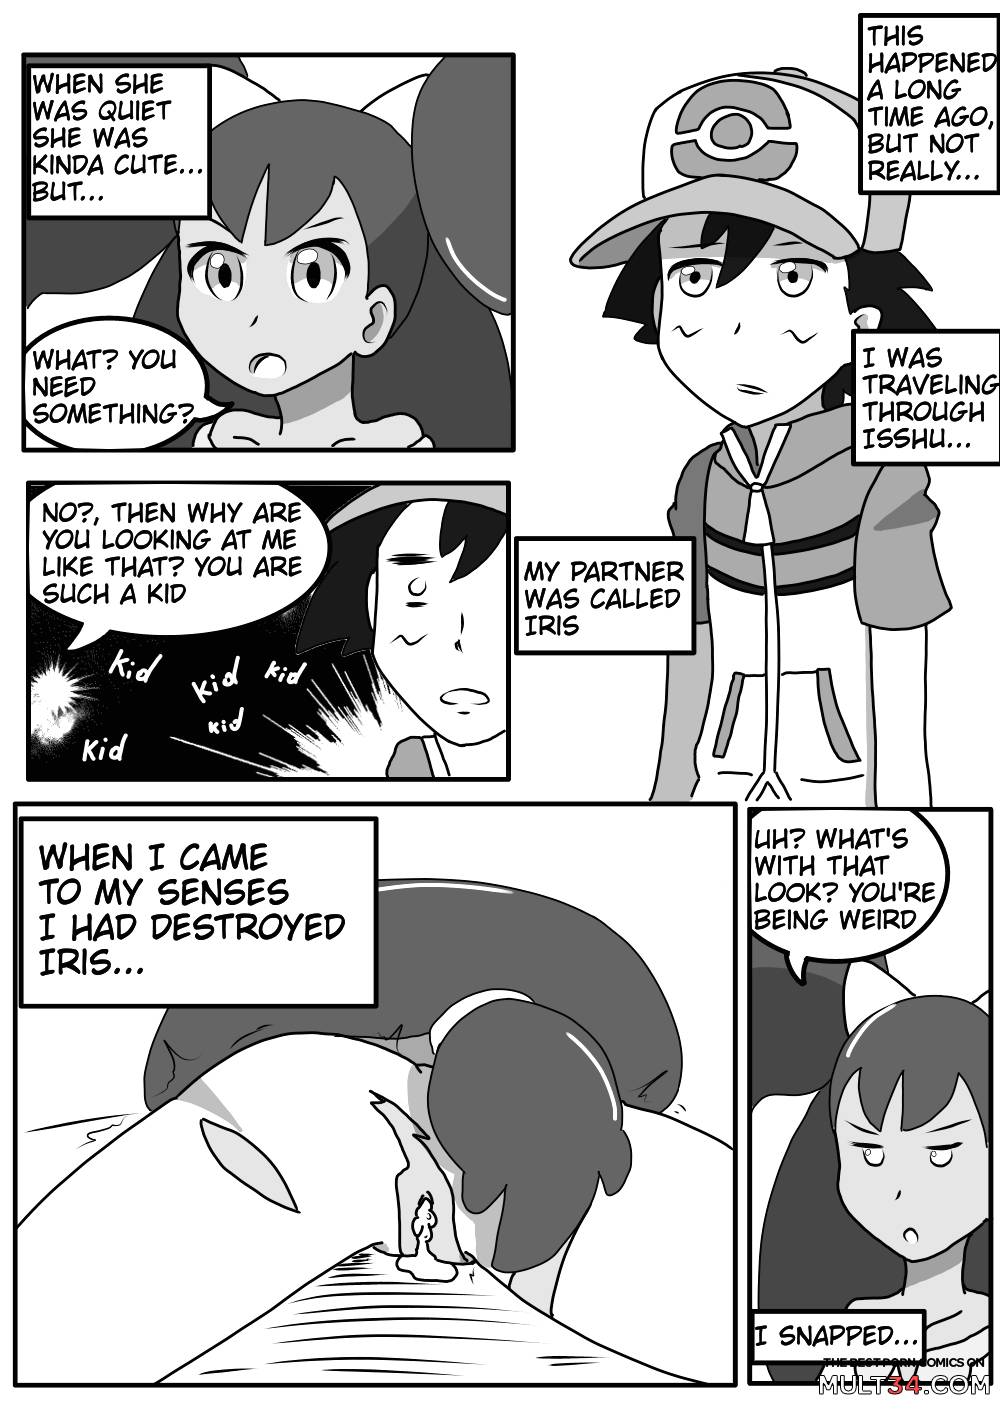 Satoshi and Koharu's Daily talk 4 page 5